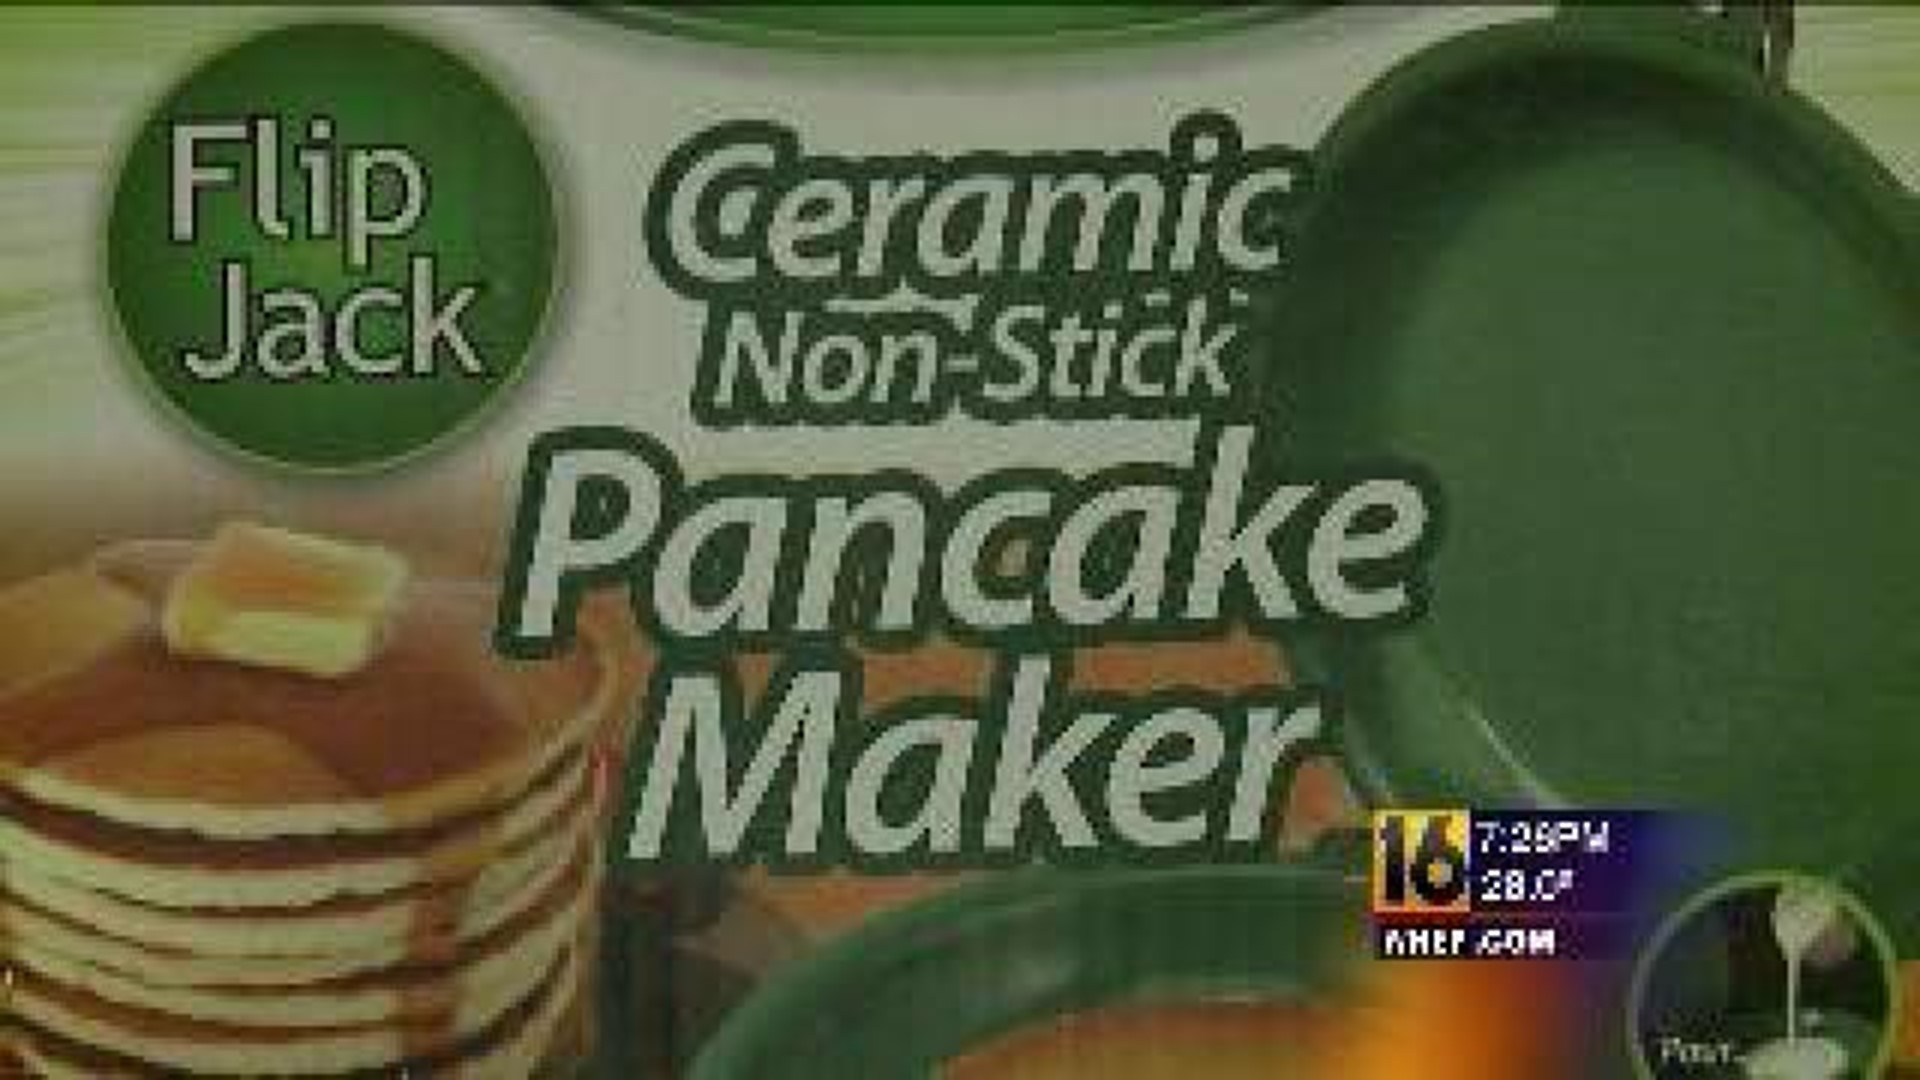 Does It Really Work: Orgreenic Pancake Maker